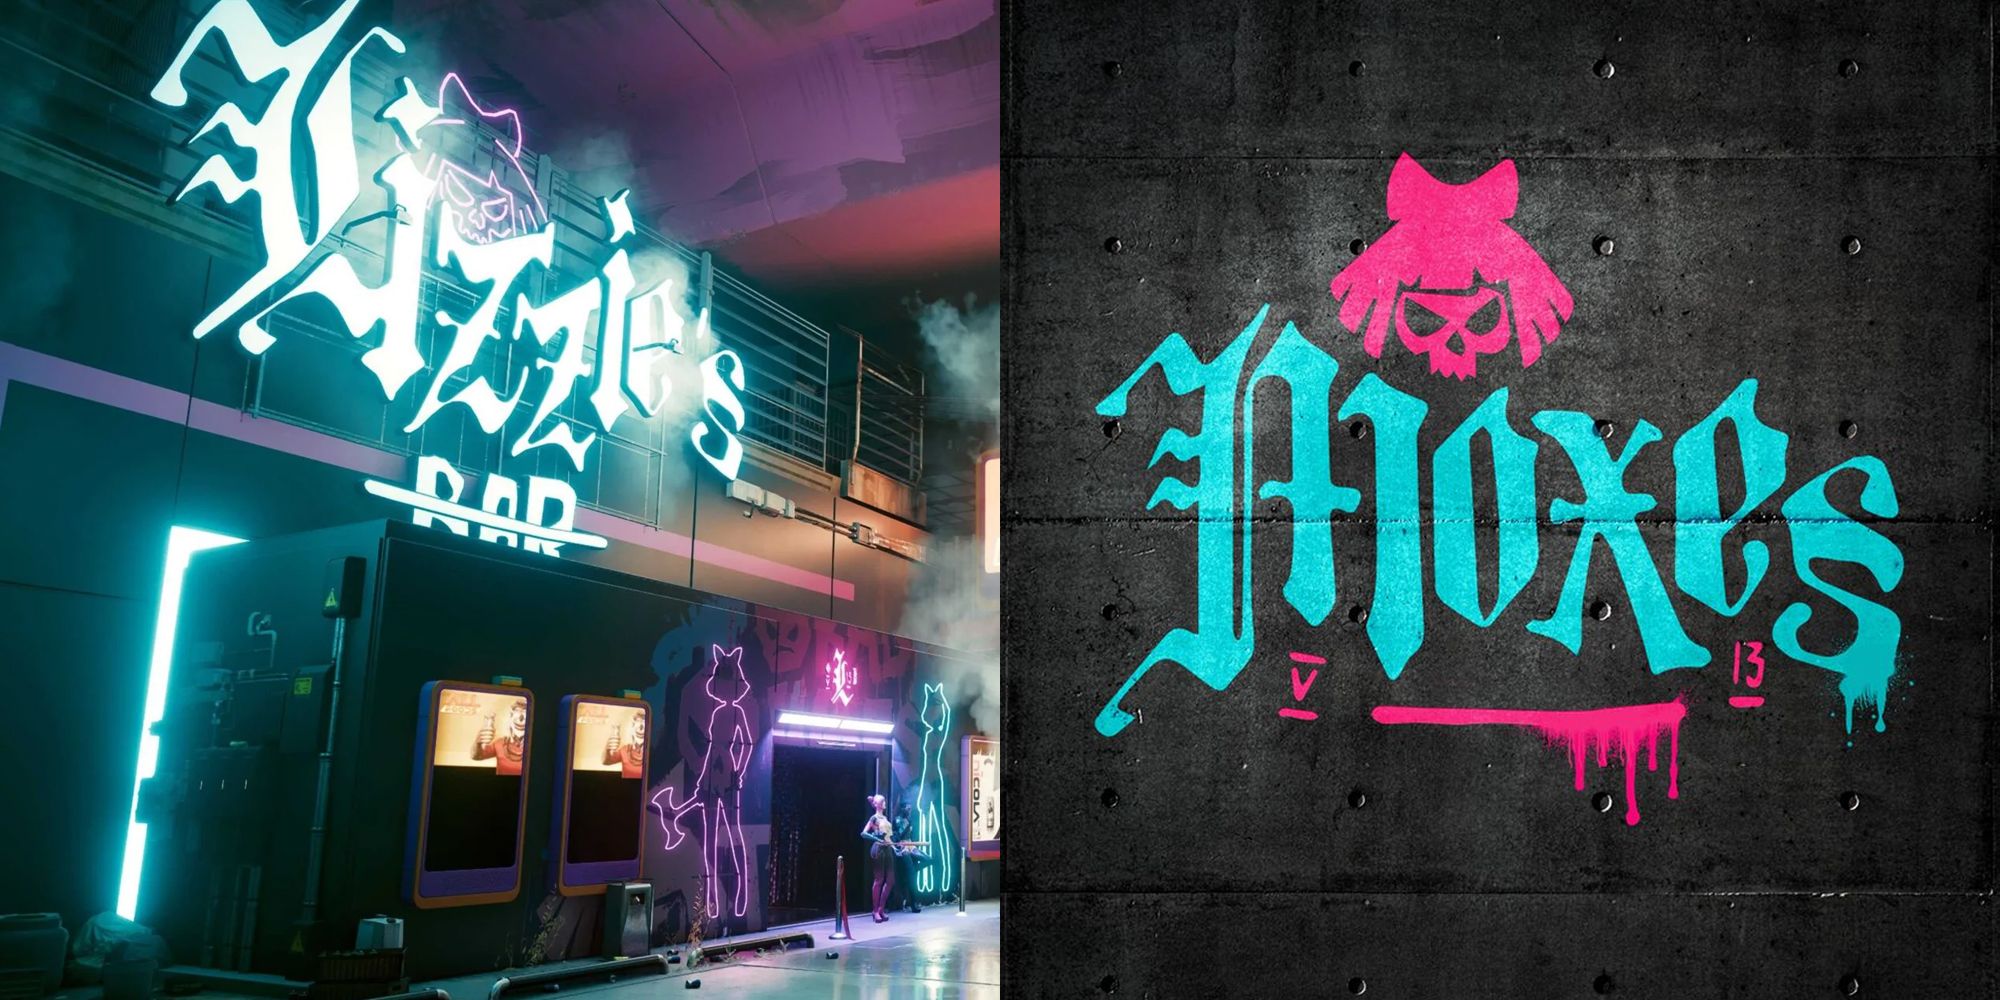 Lizzie's Bar and the Mox logo in Cyberpunk 2077